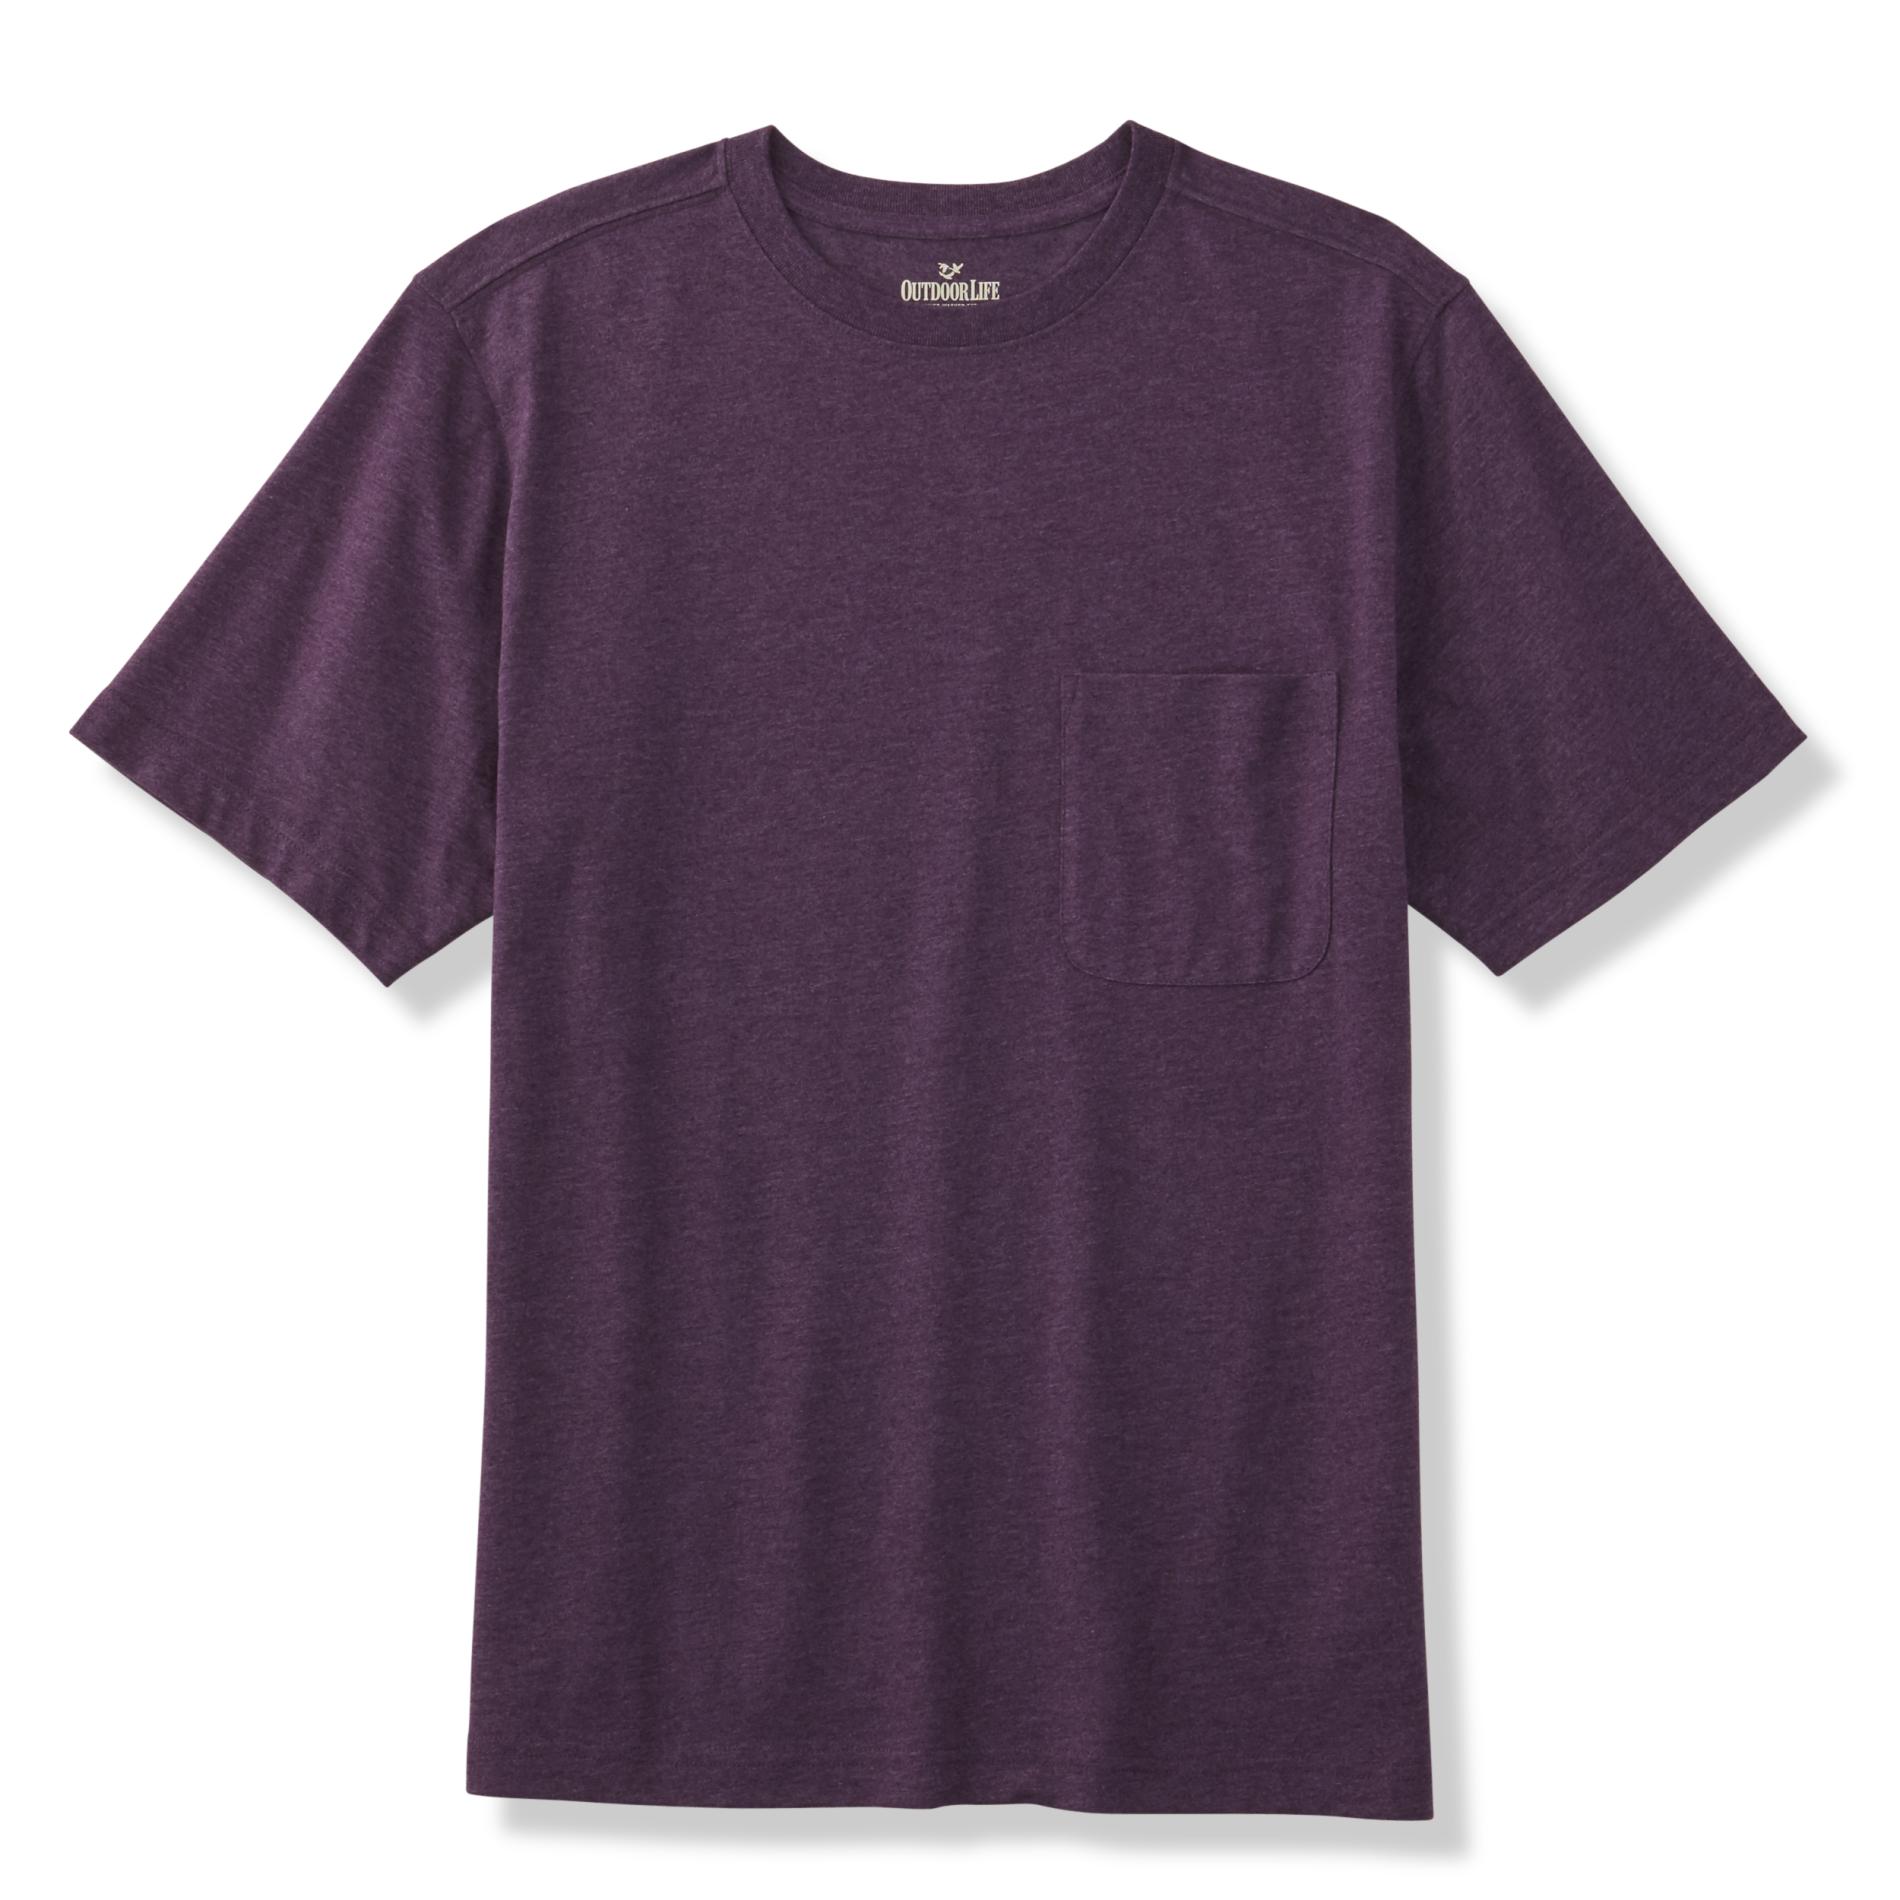 Outdoor Life Men's Big & Tall Pocket T-Shirt | Shop Your Way: Online ...